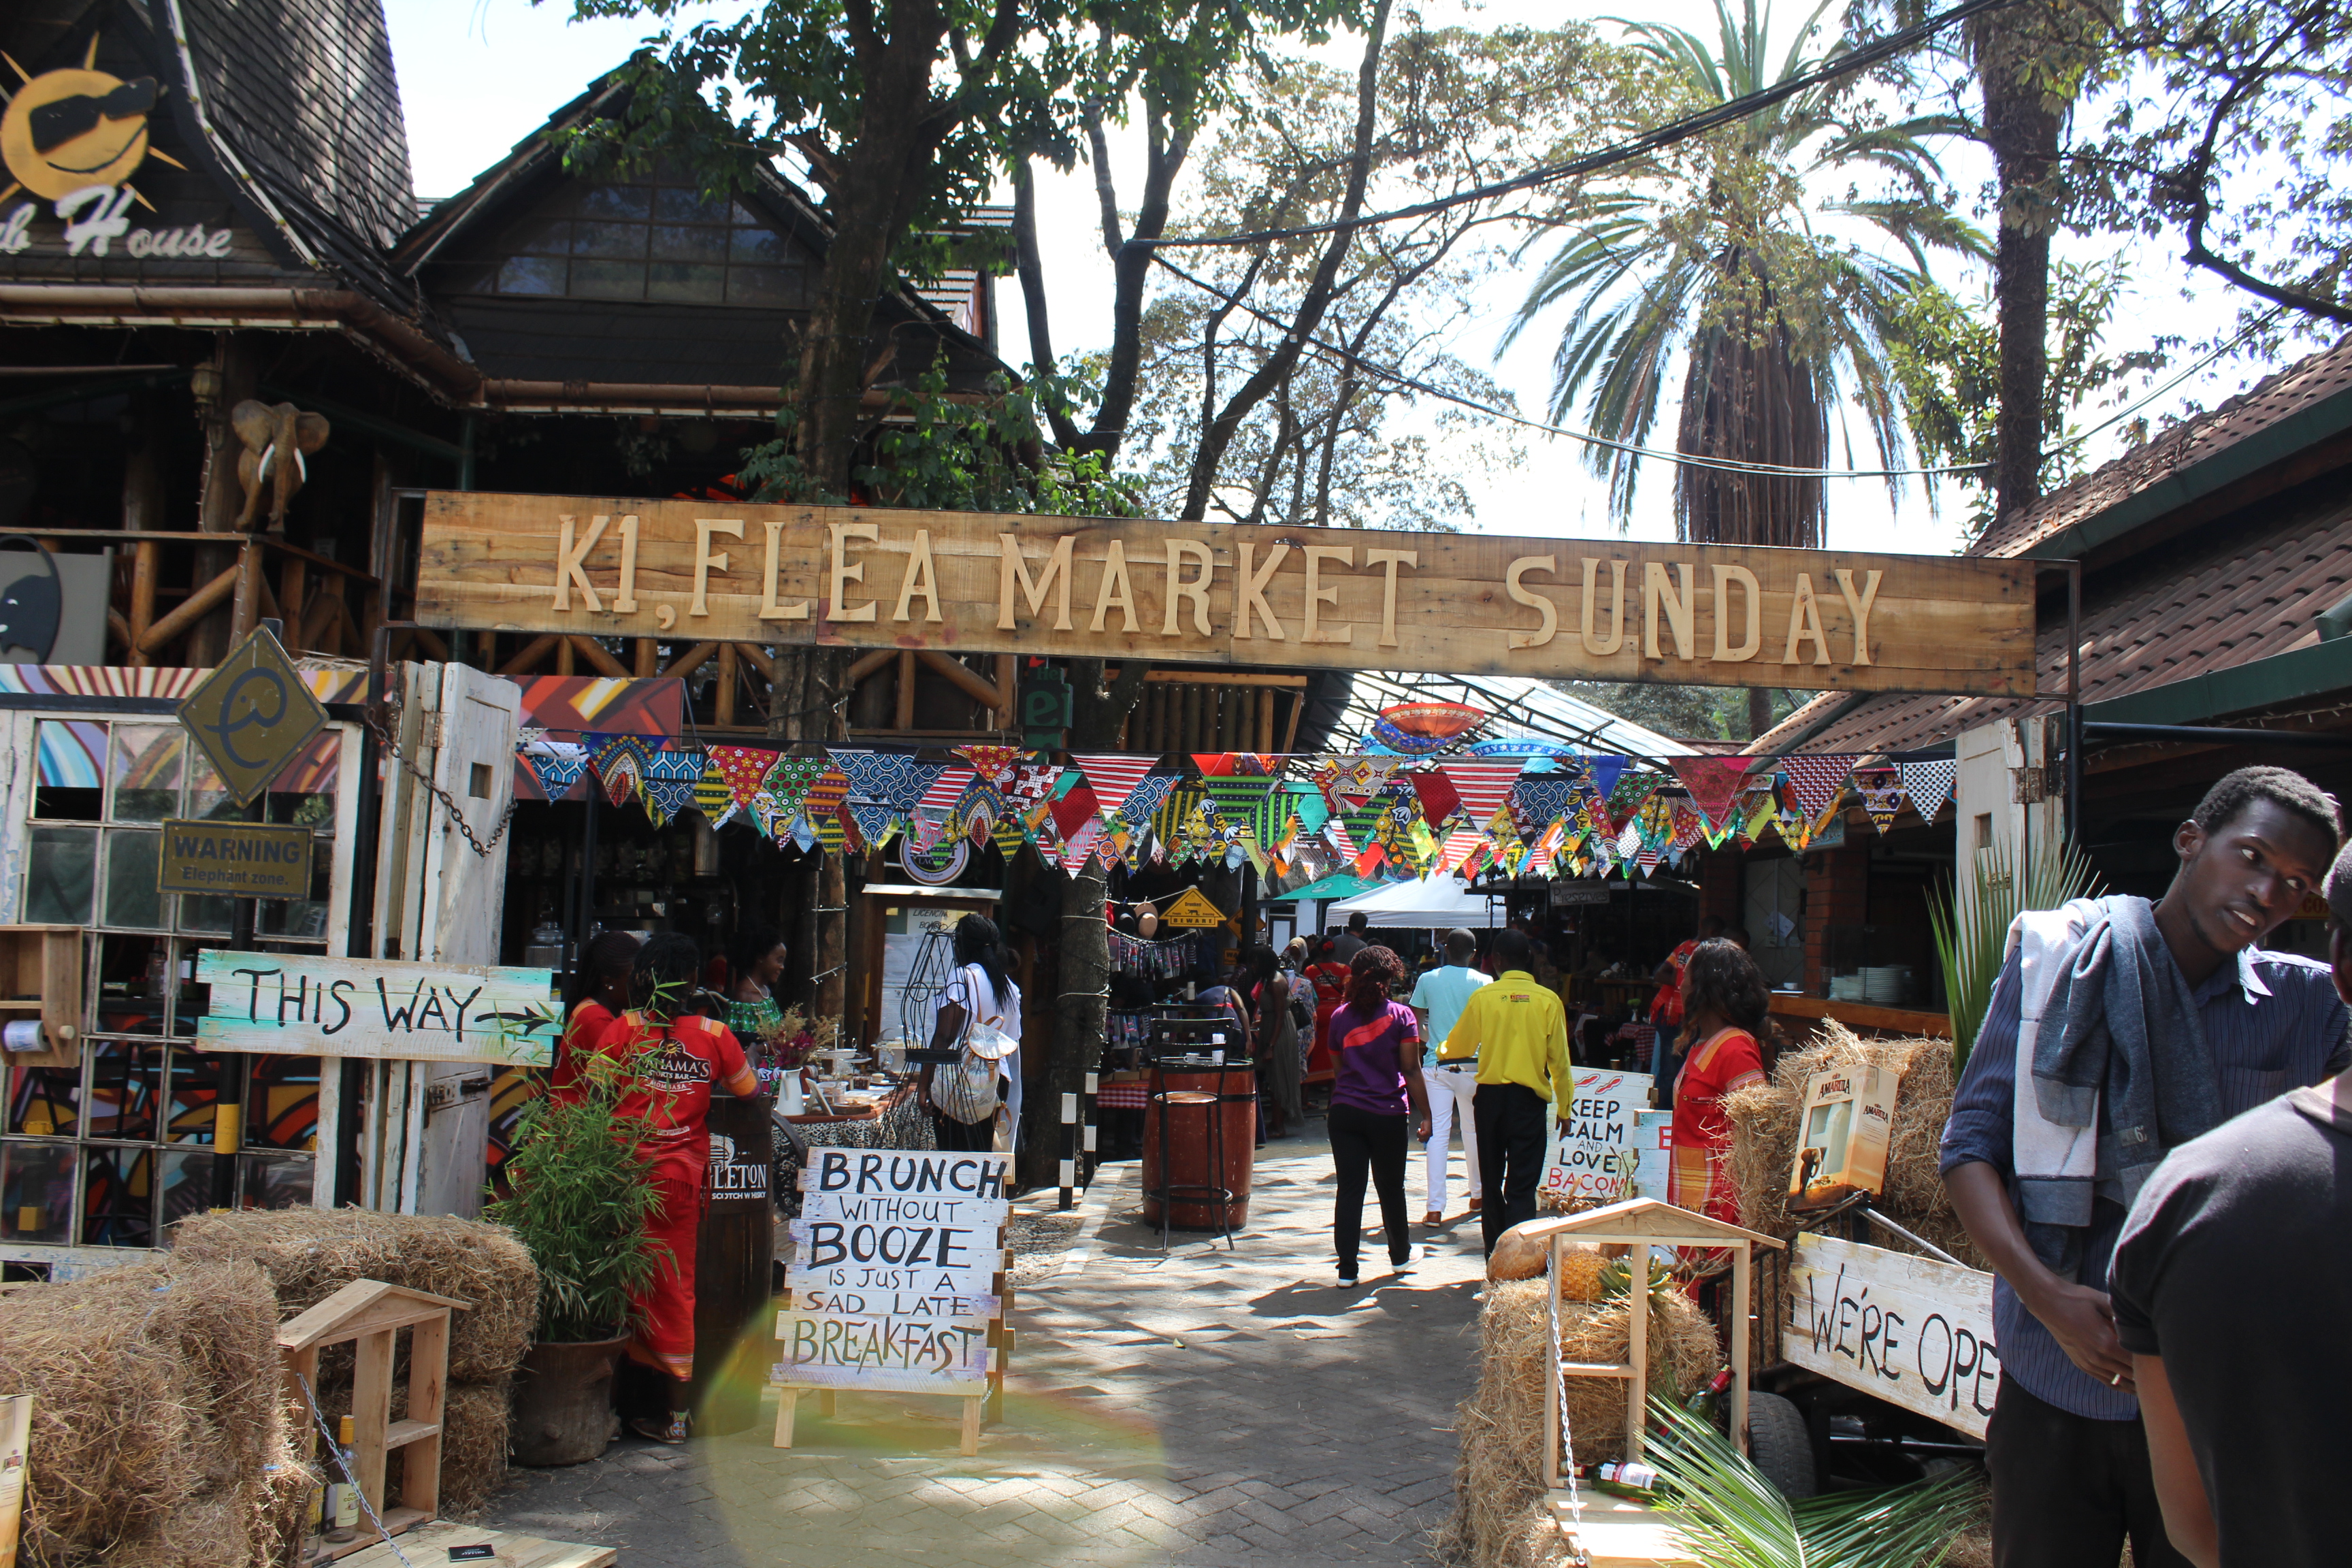 My Sunday In 10 Photos|| K1 Flea Market - Treats On A Budget